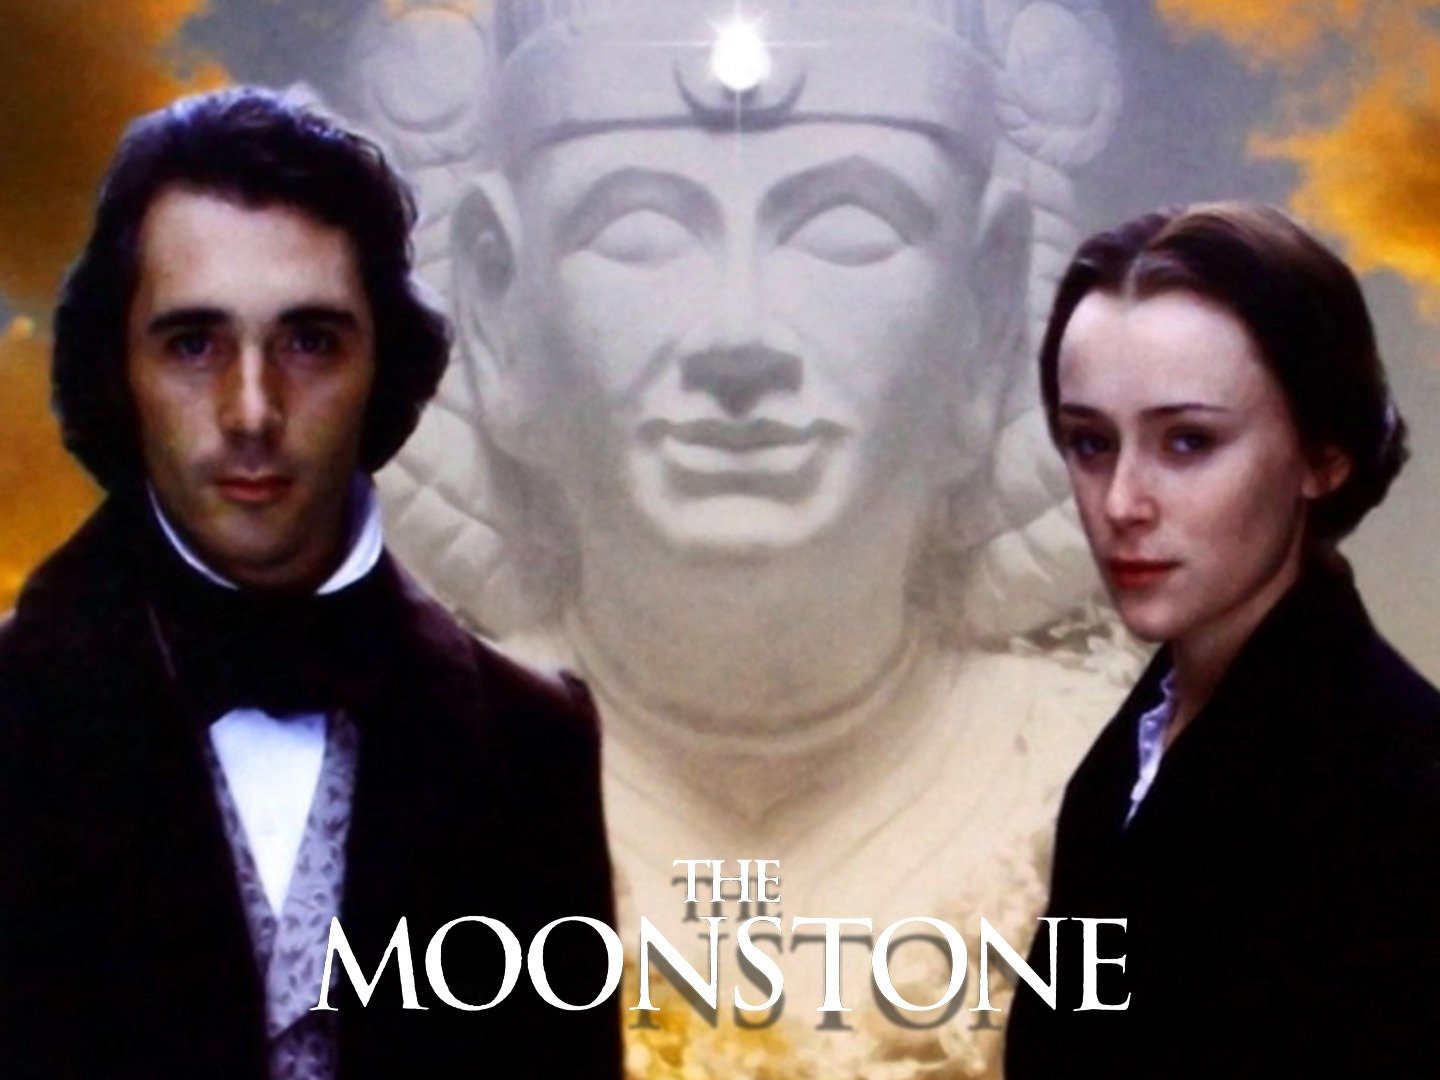 The Moonstone Girls by Brooke Skipstone